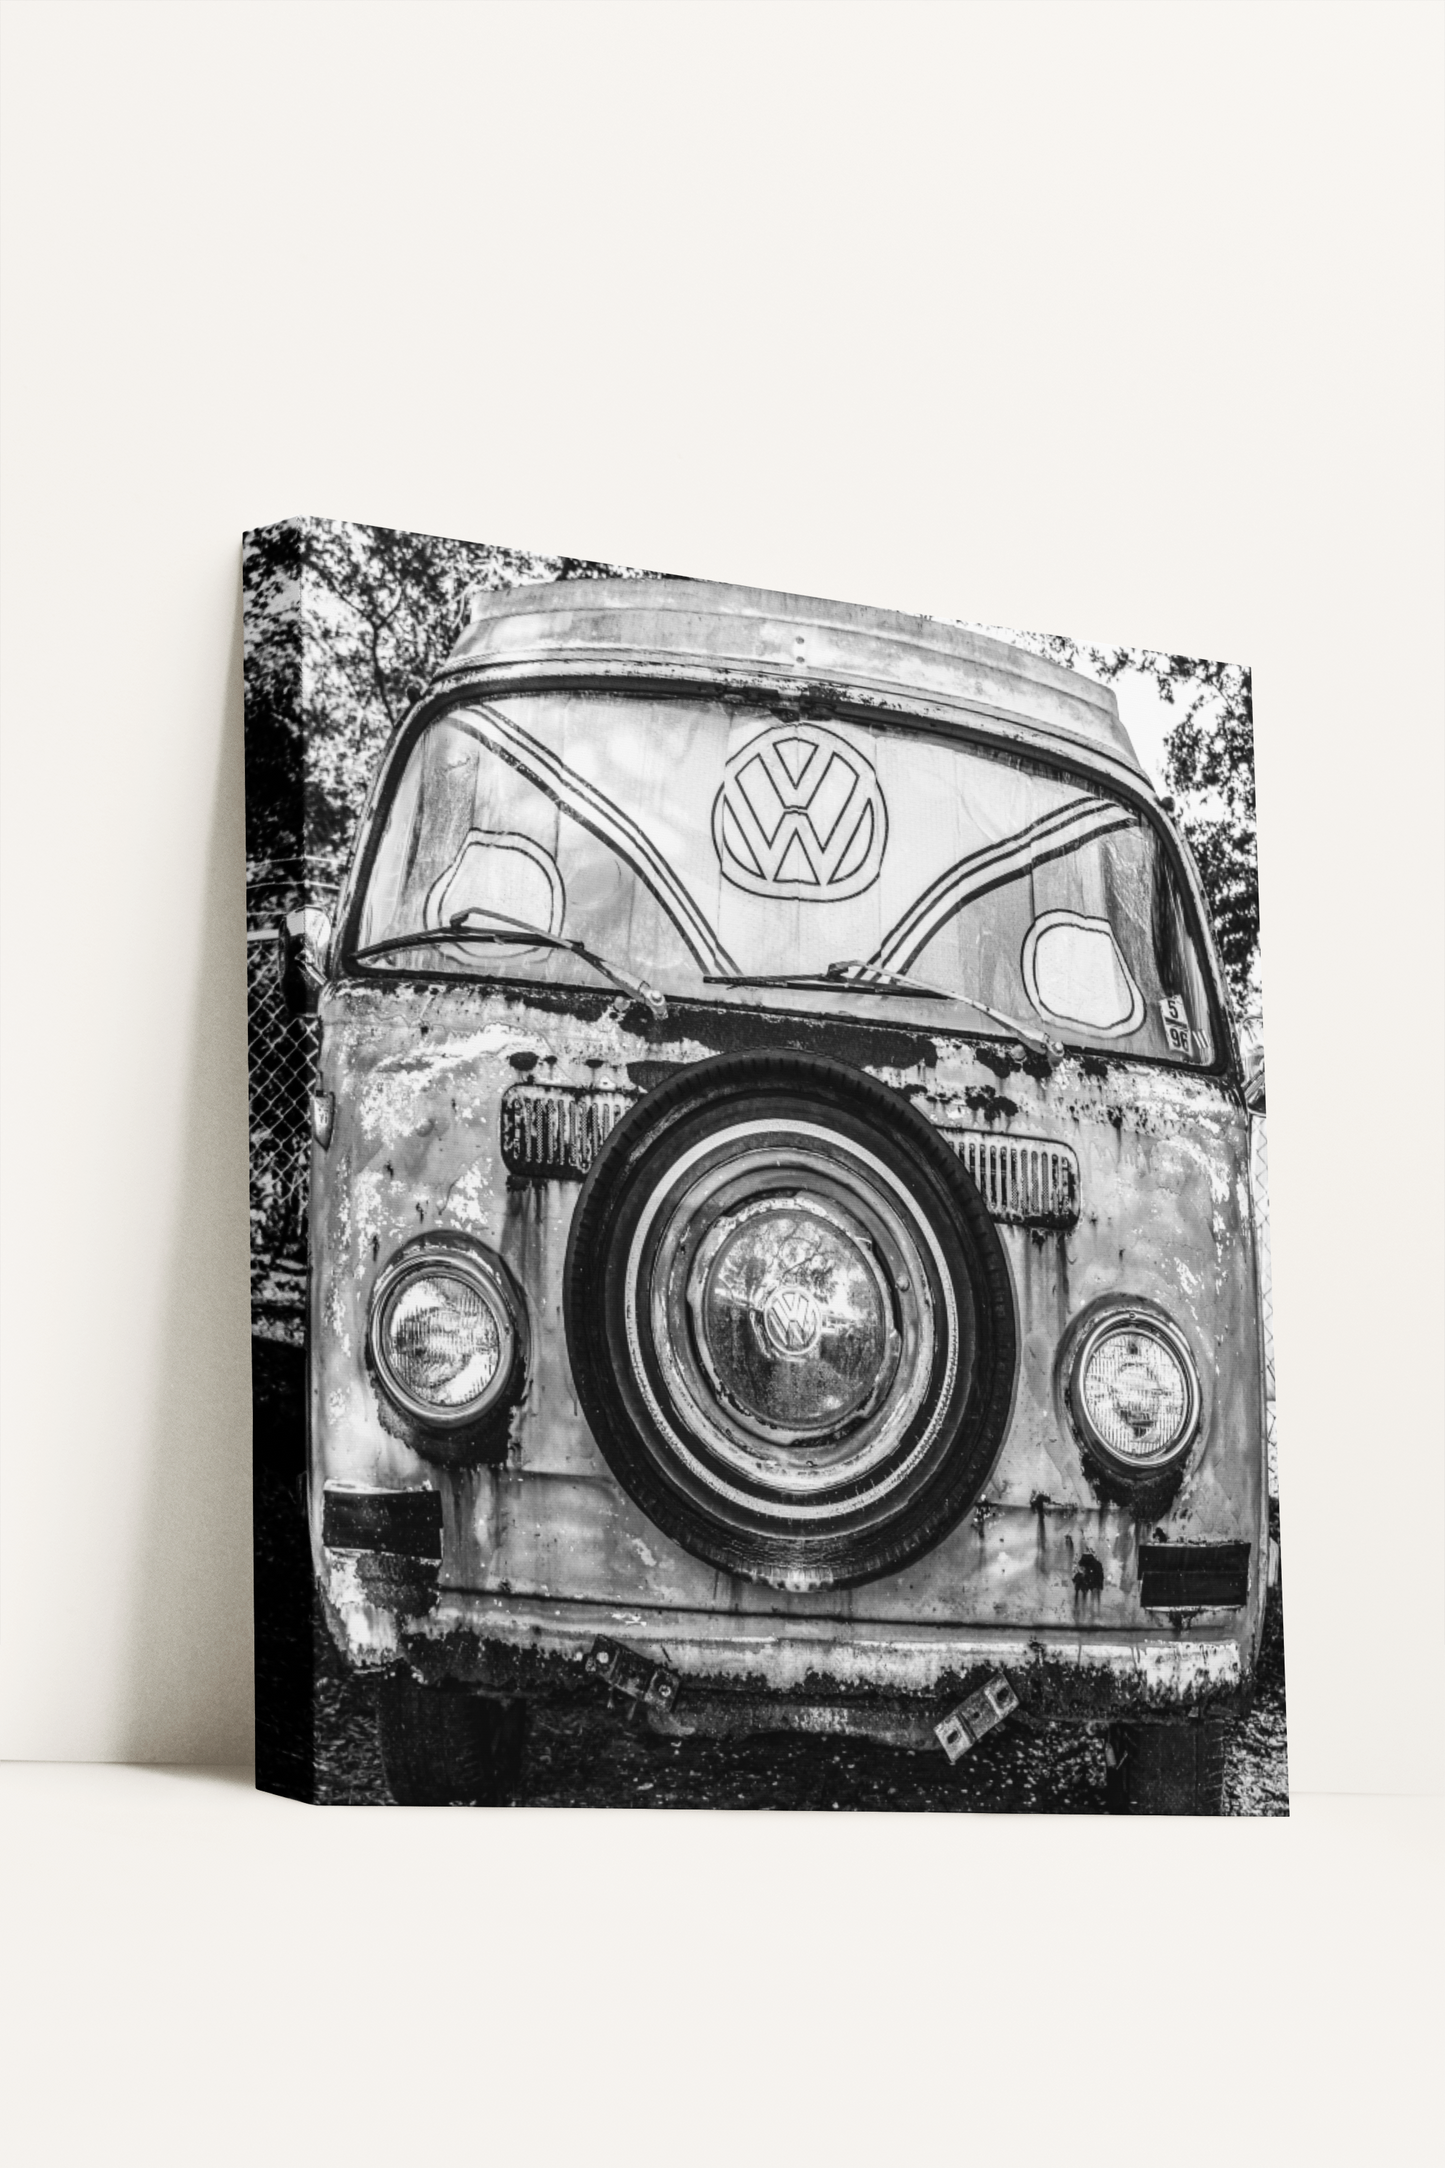 Vintage Volkswagen junkyard van canvas print